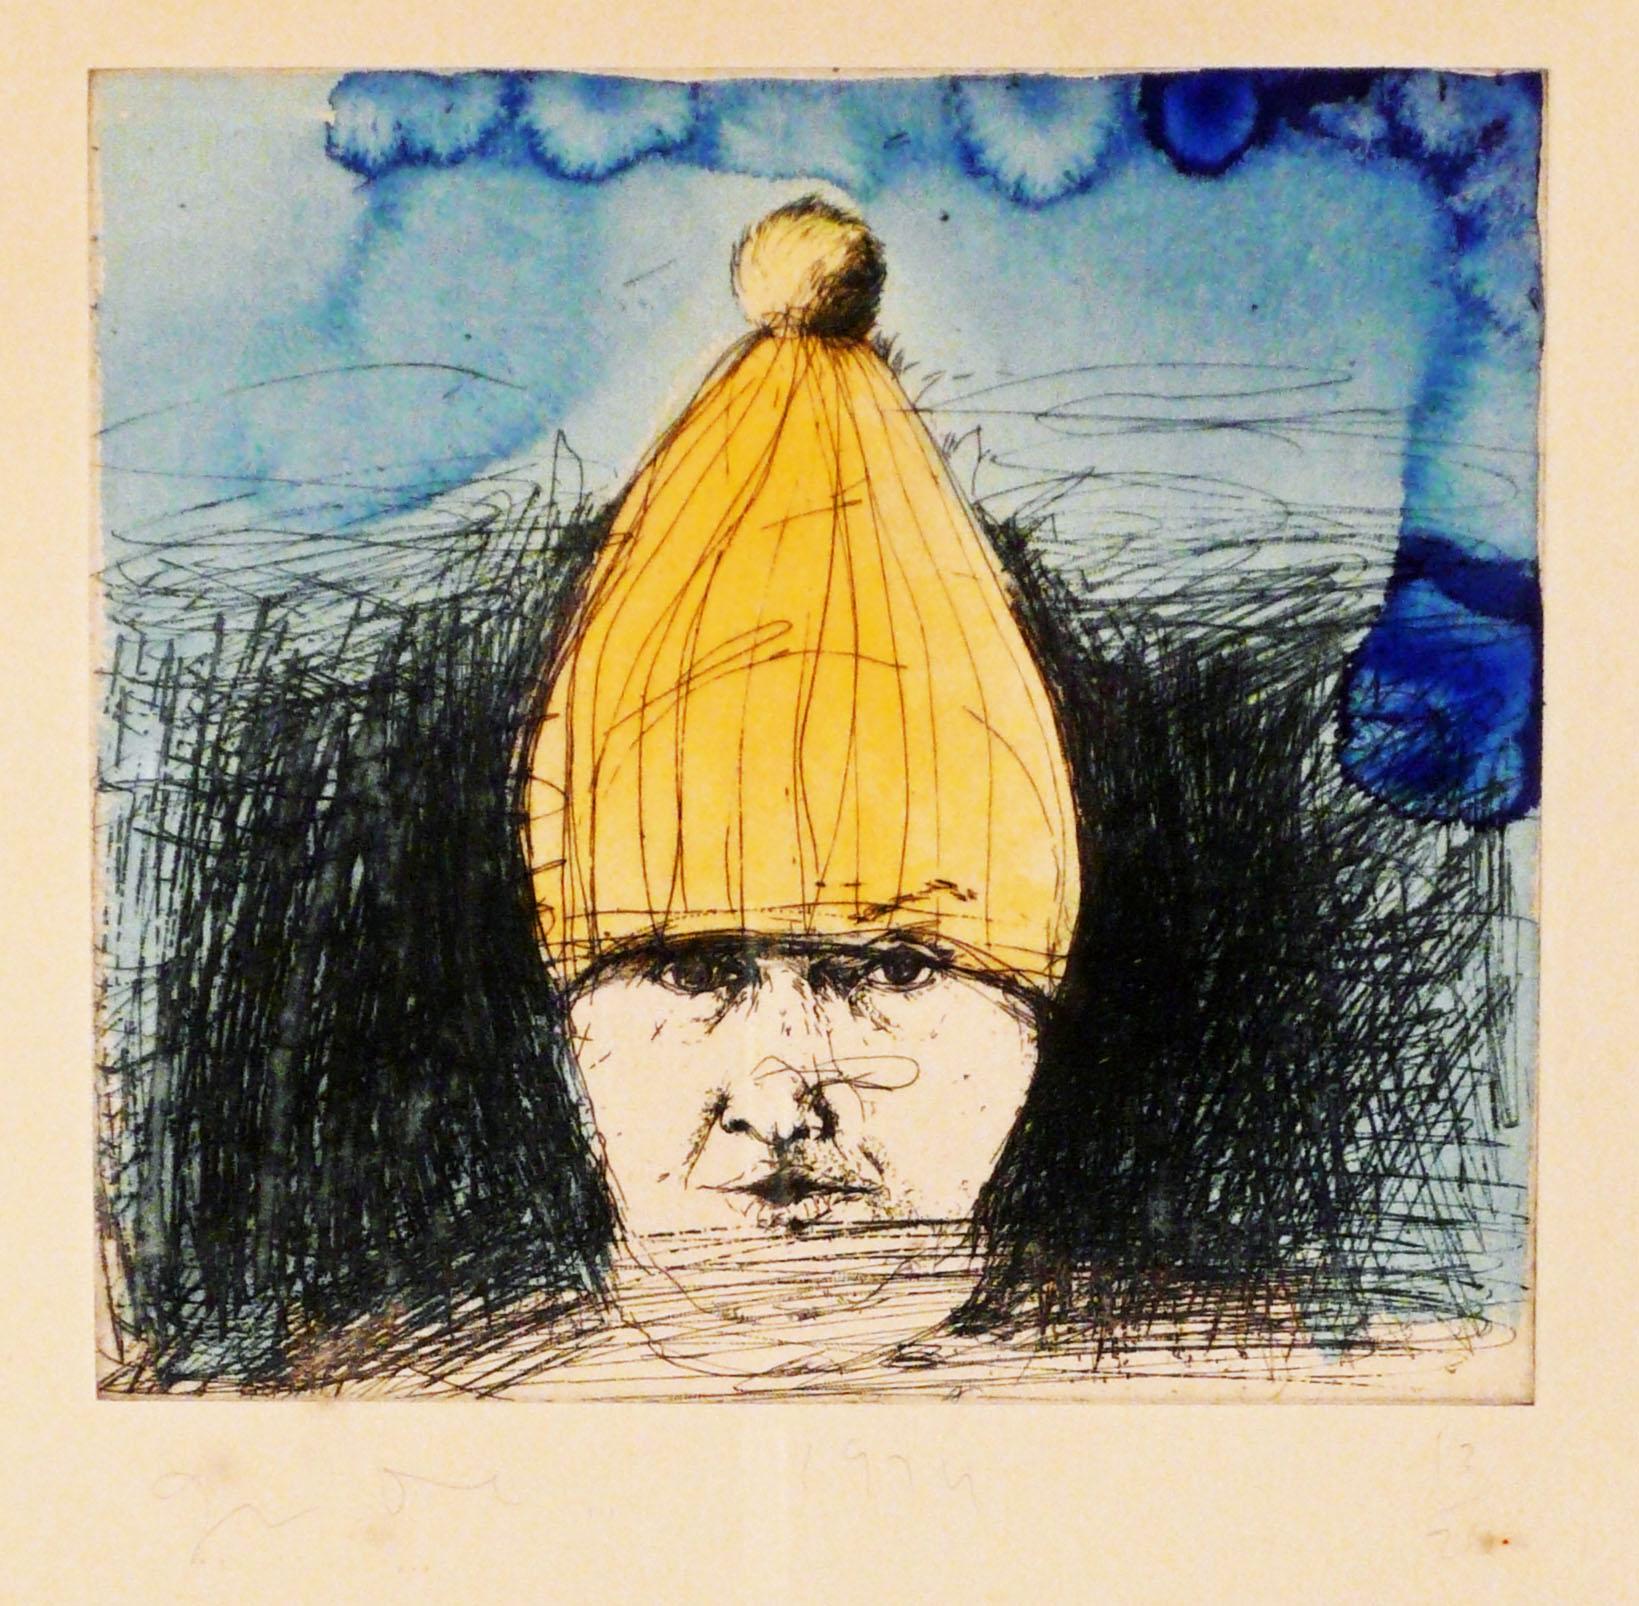 Jim Dine Portrait Print - SELF-PORTRAIT IN A SKI HAT